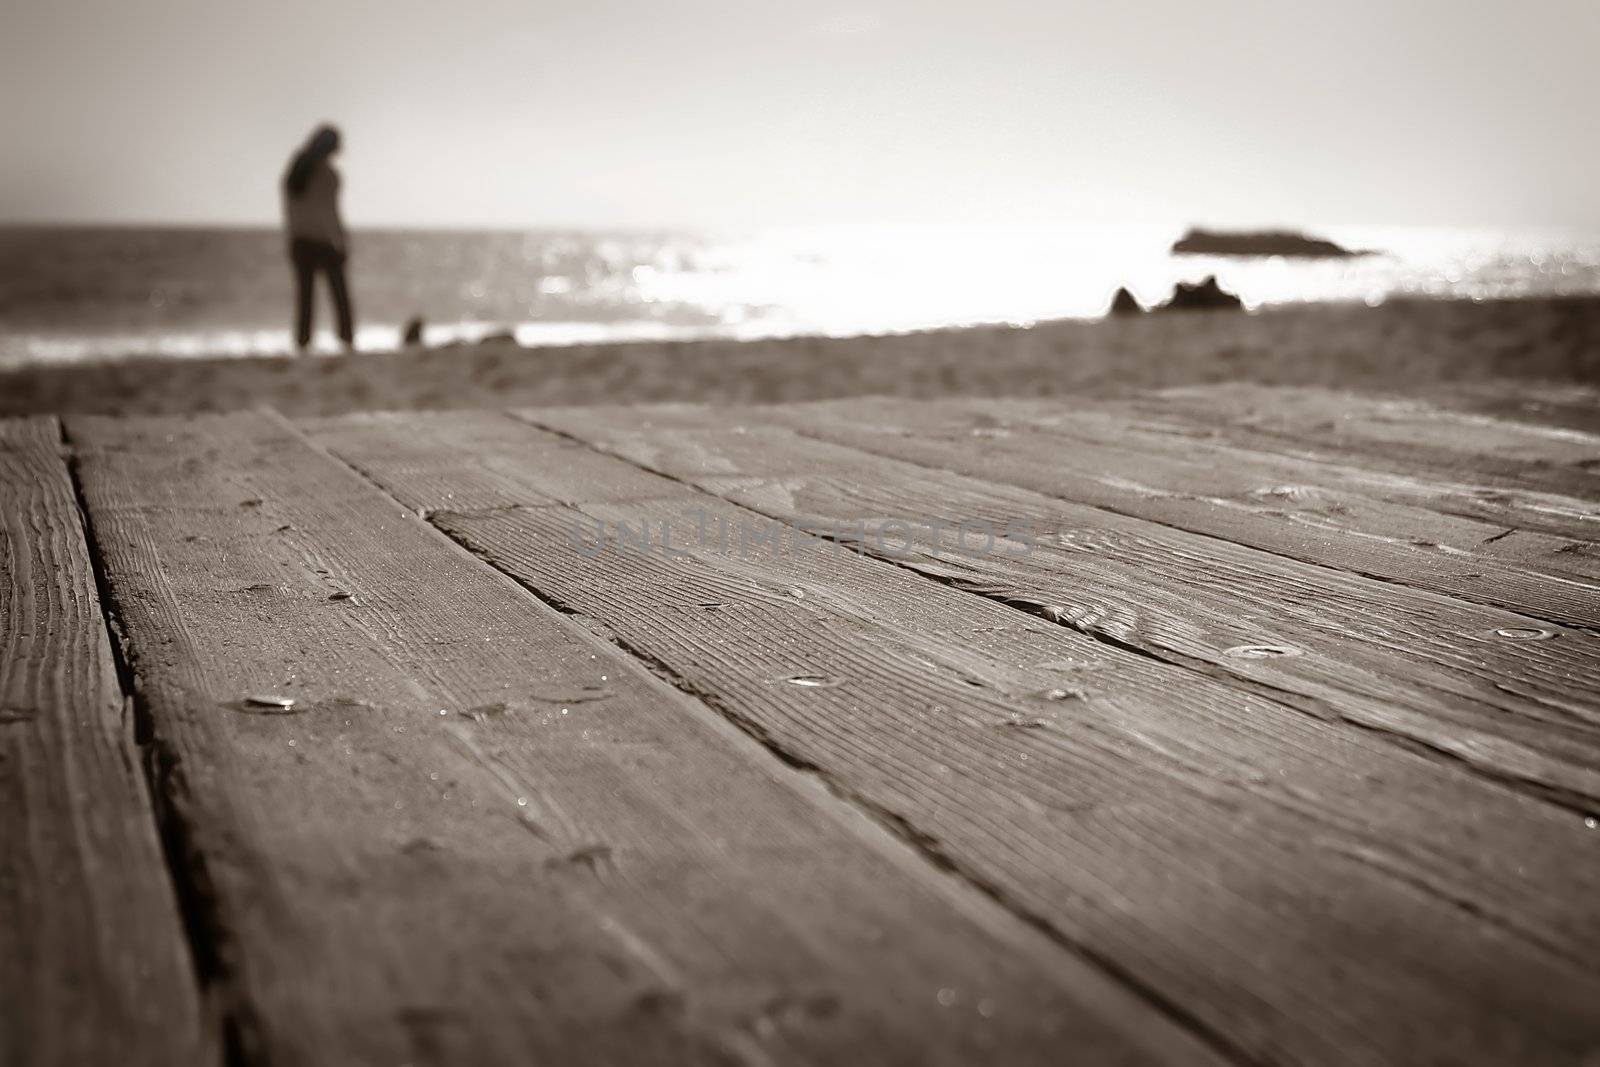 Boardwalk at the beach in Laguna Beach California